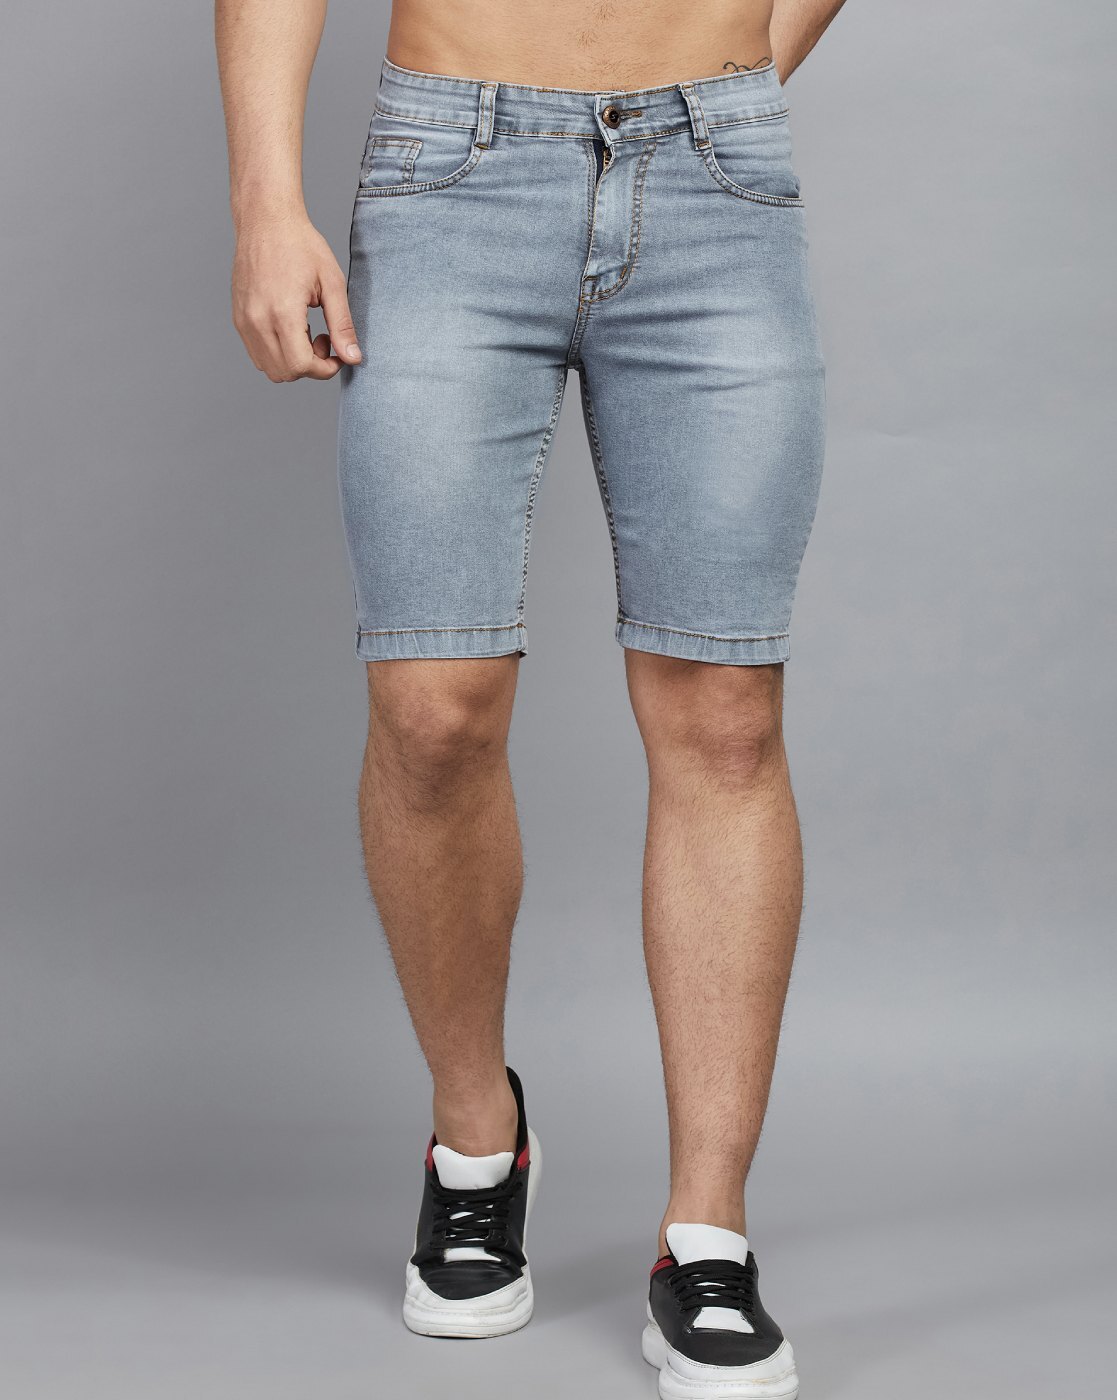 Men Slim Ripped Denim Shorts Jeans Designer Distressed Bleached Stylist  Holes Retro Short Pants Big Size 42 Trousers JB3 From Xichat, $28.93 |  DHgate.Com